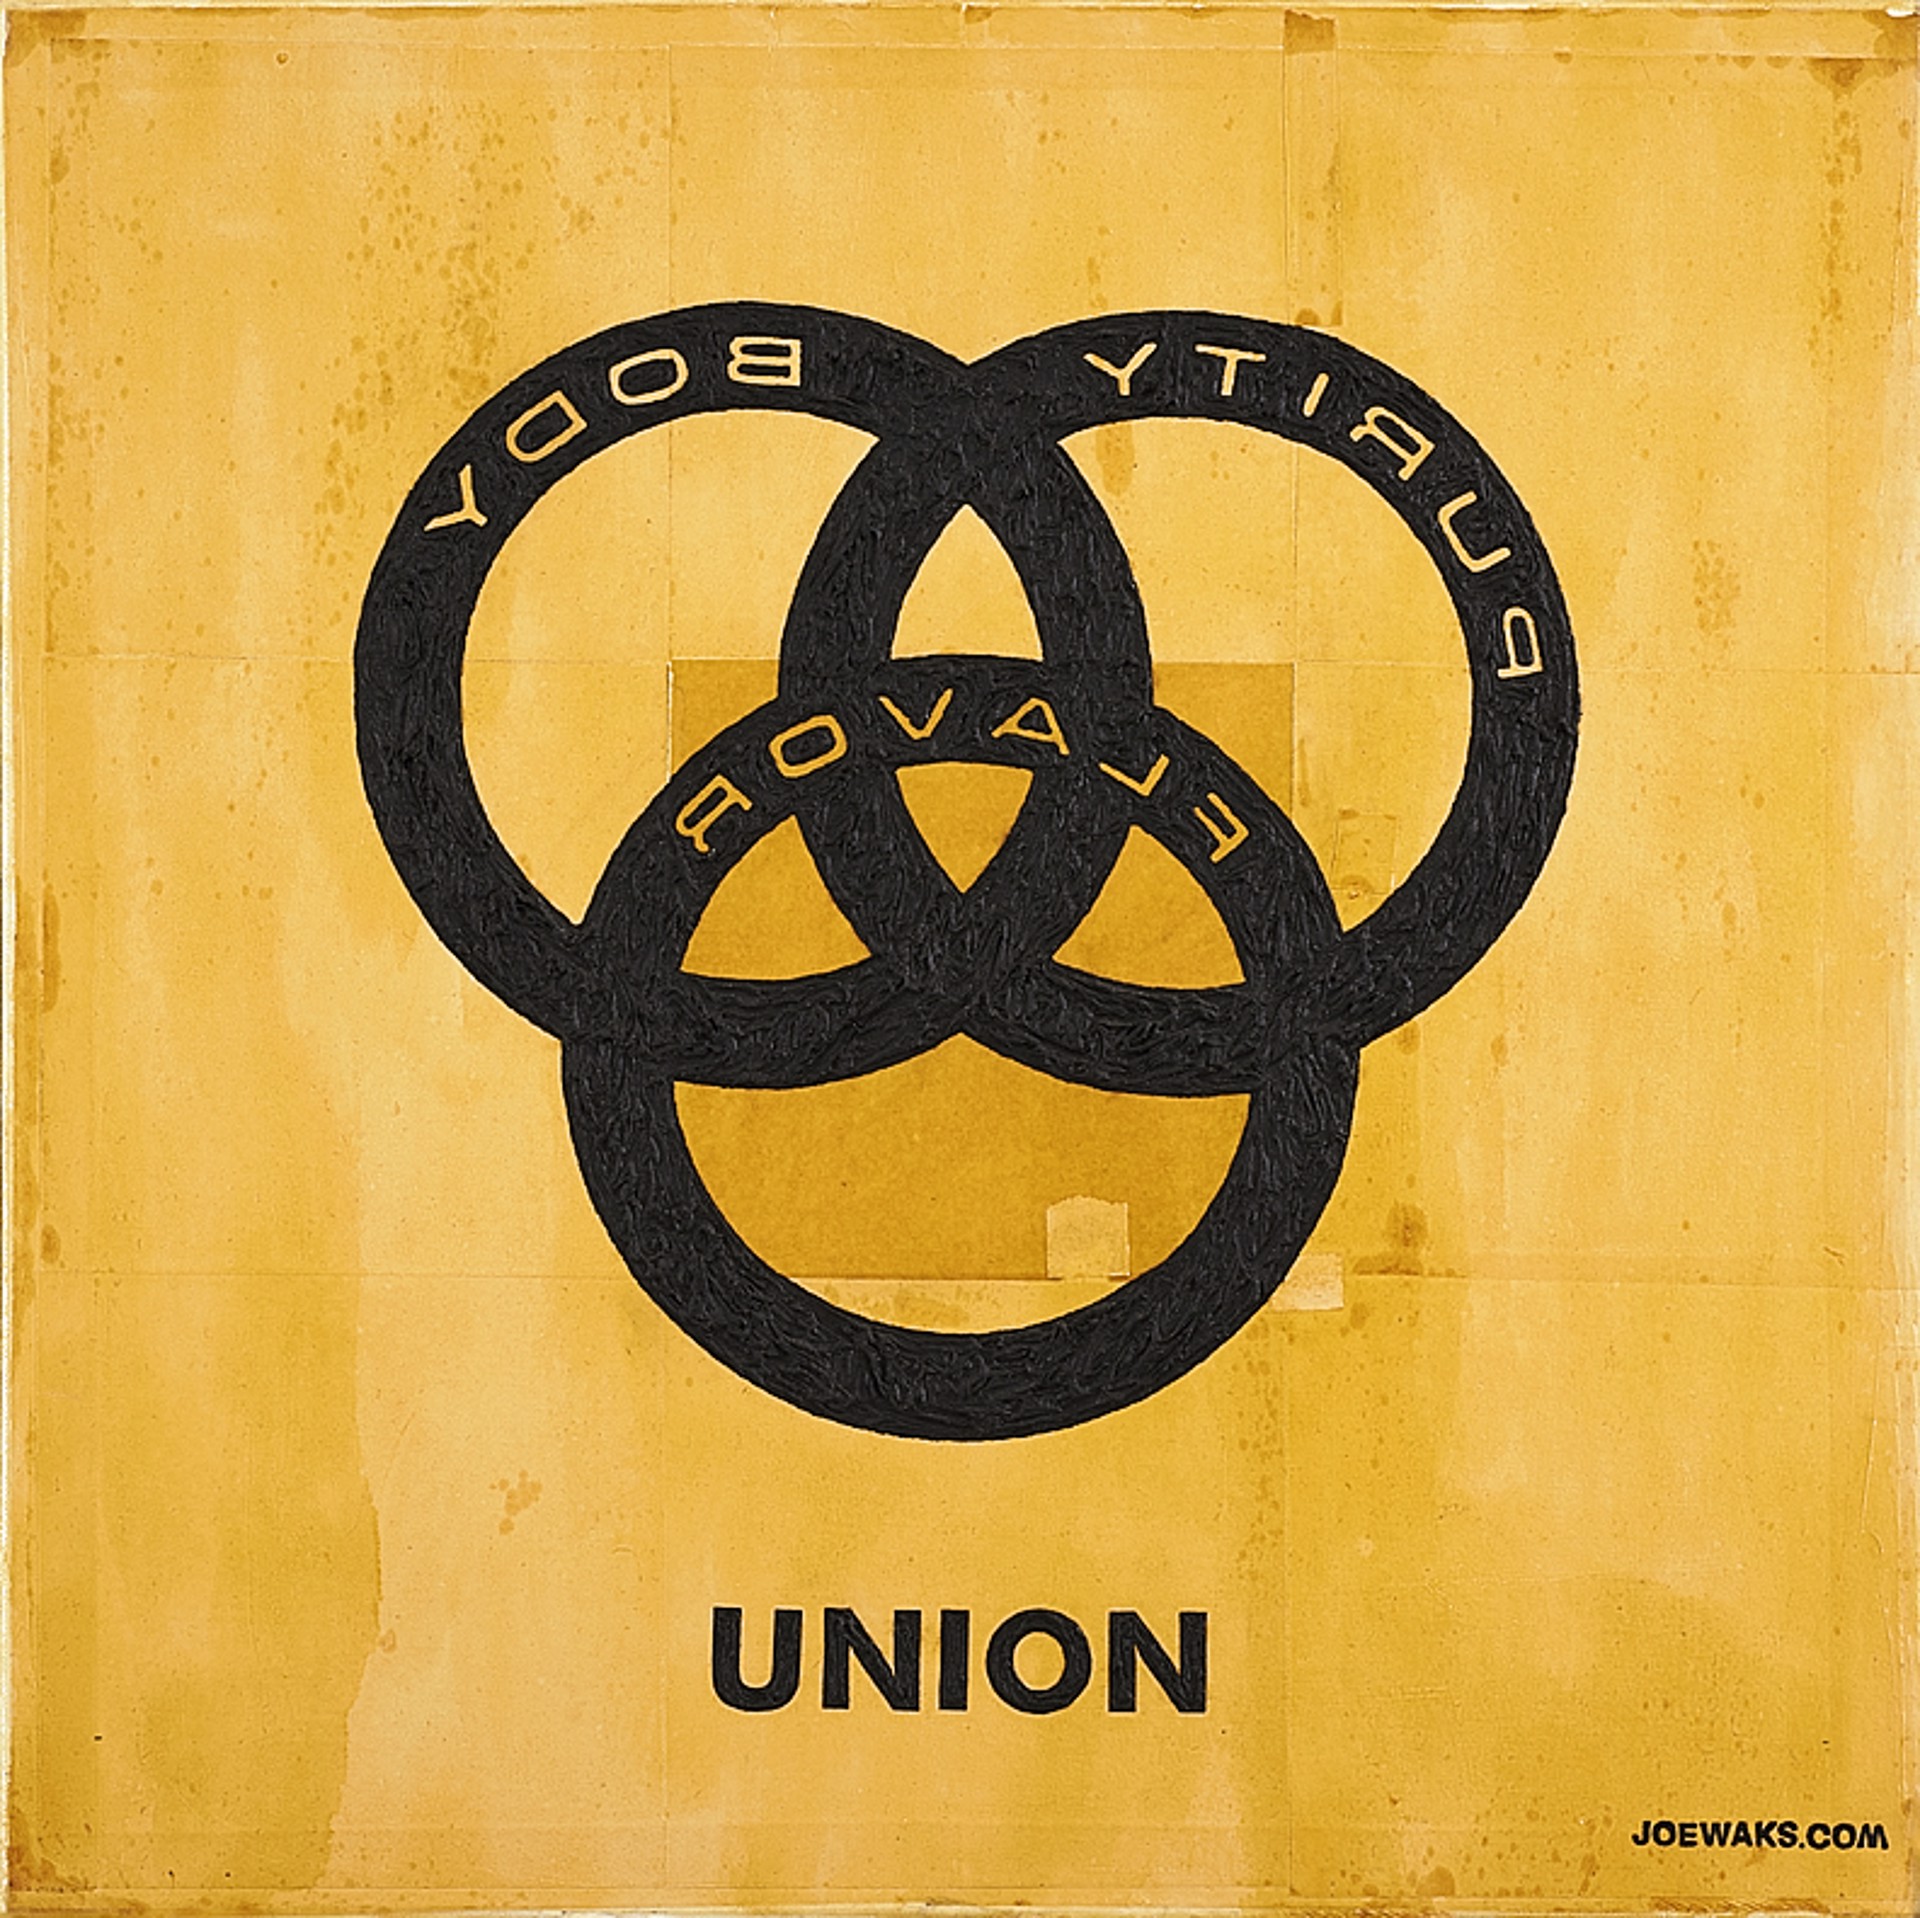 Union by Joe Waks